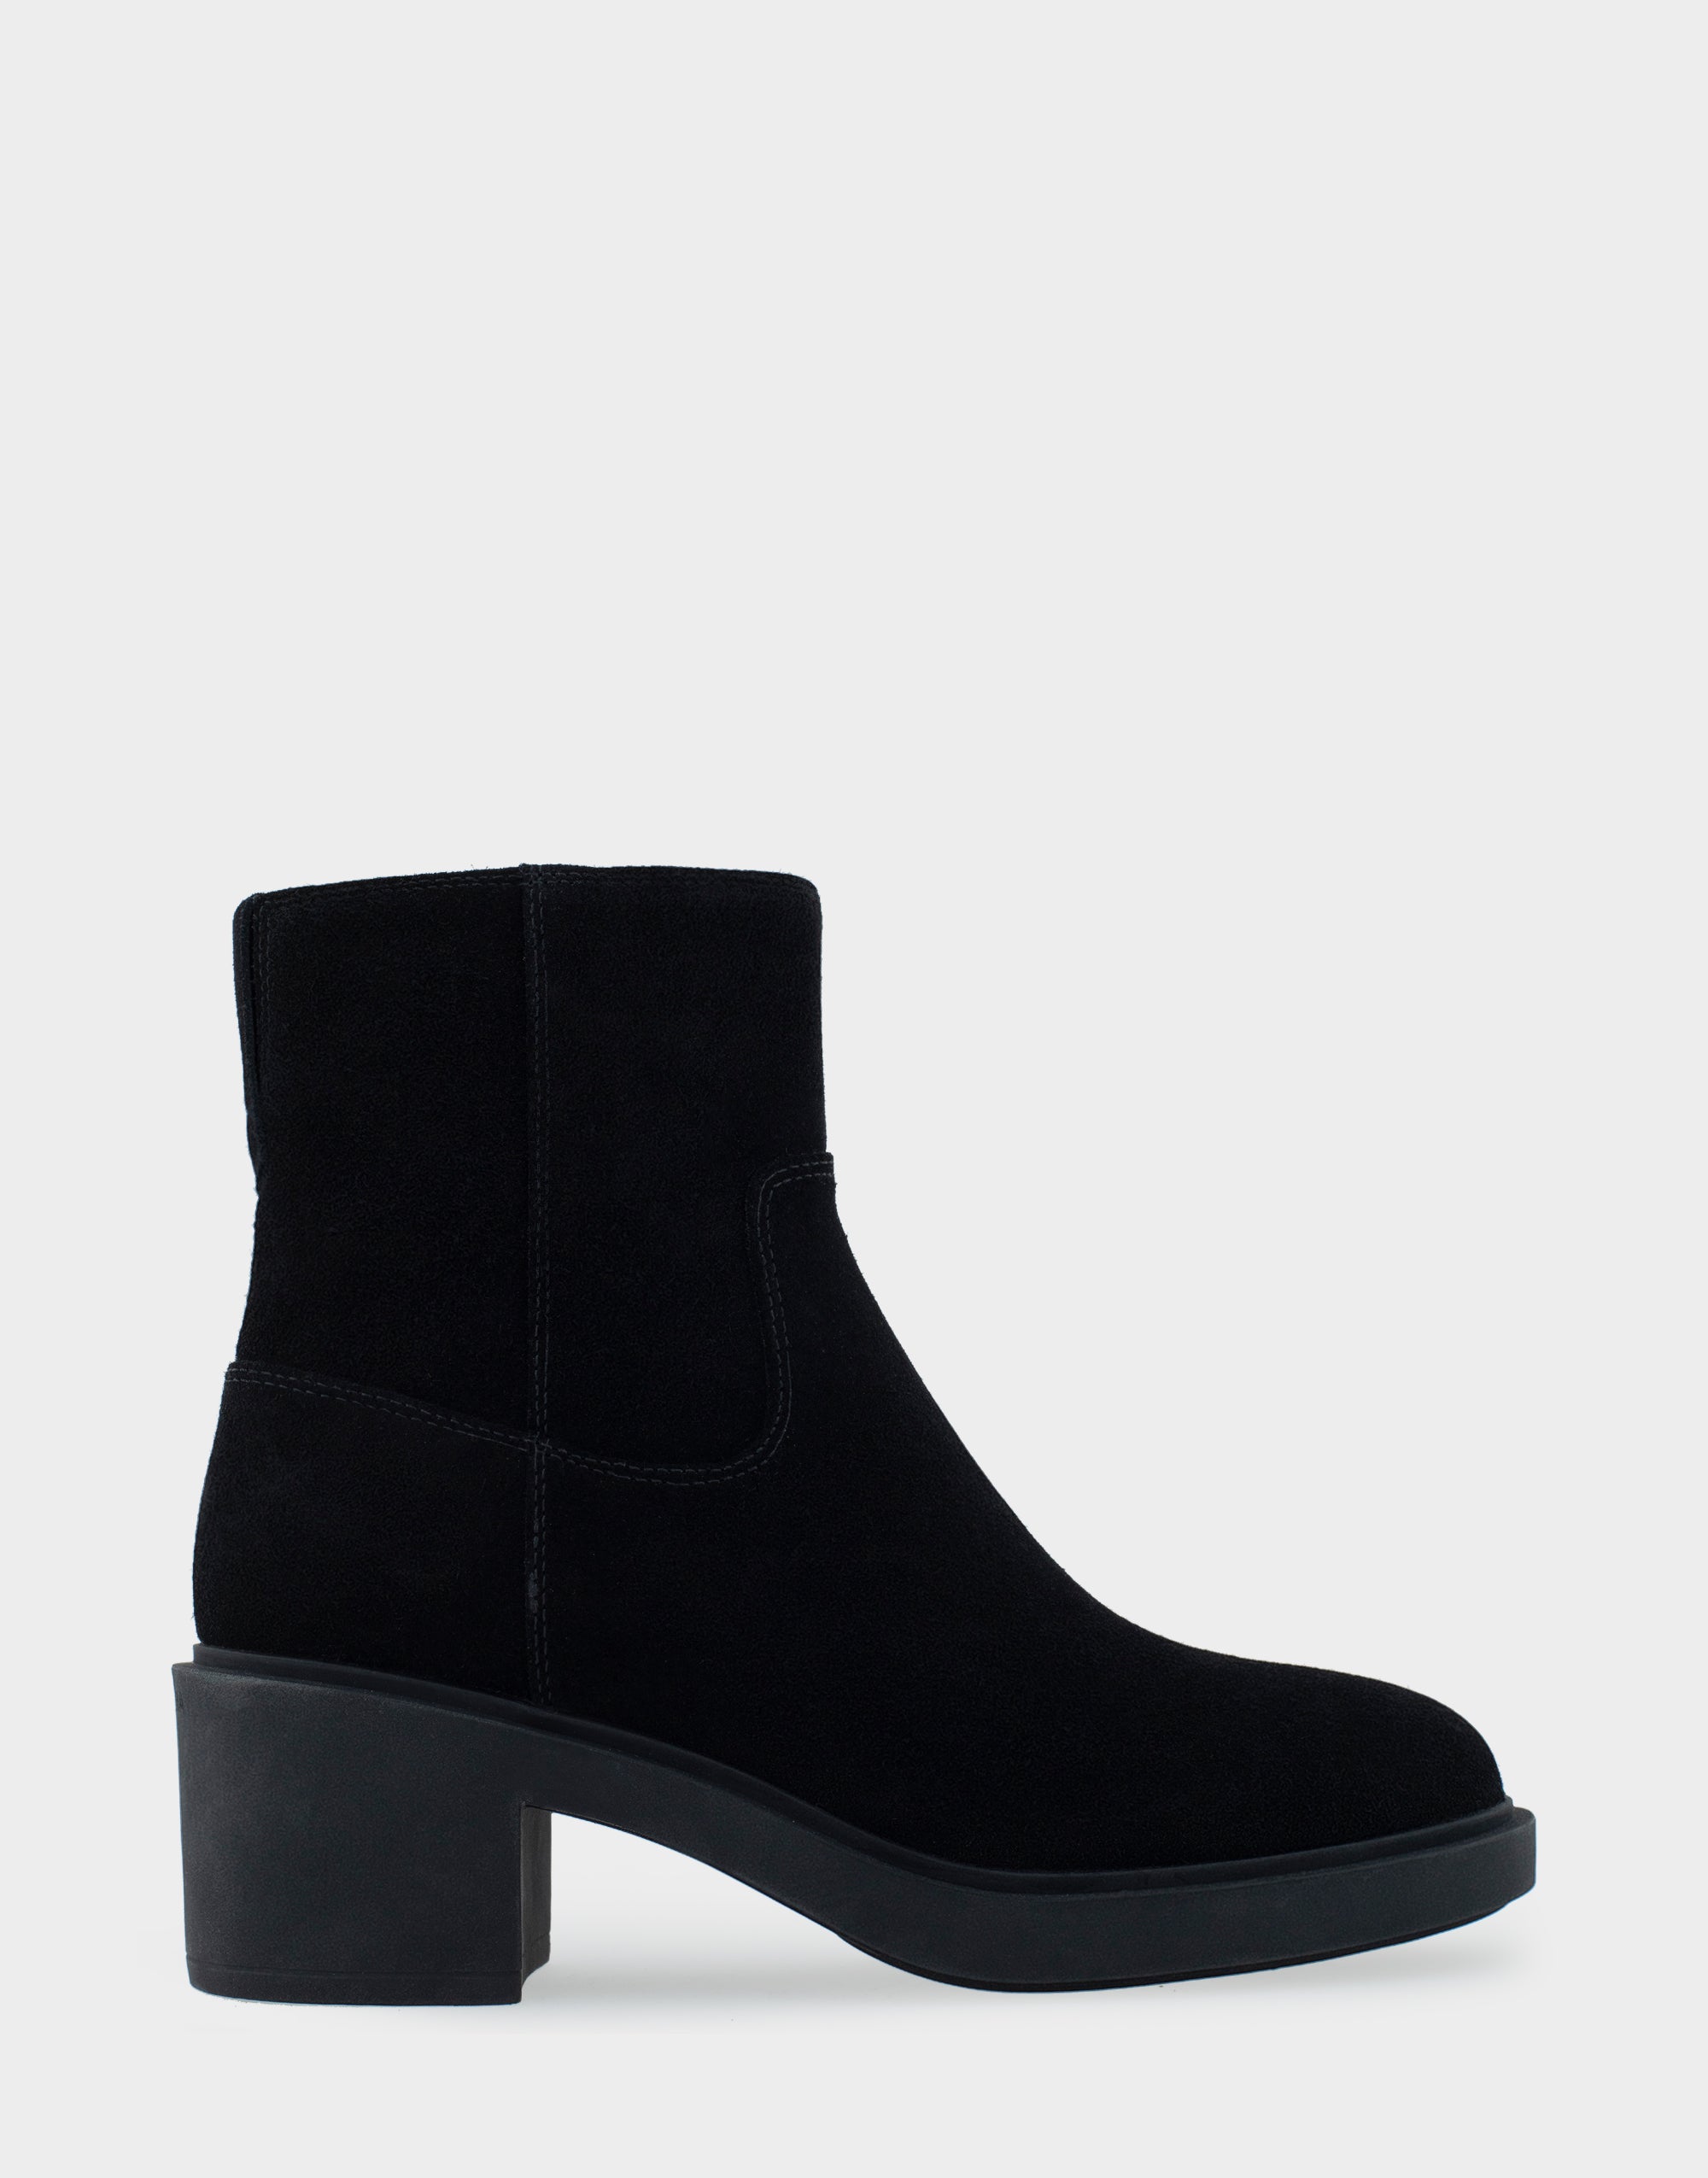 Sorel Boots Womens 6 Cate Ankle Booties Block Heels NL3380-224 Brown Suede  Zip | eBay